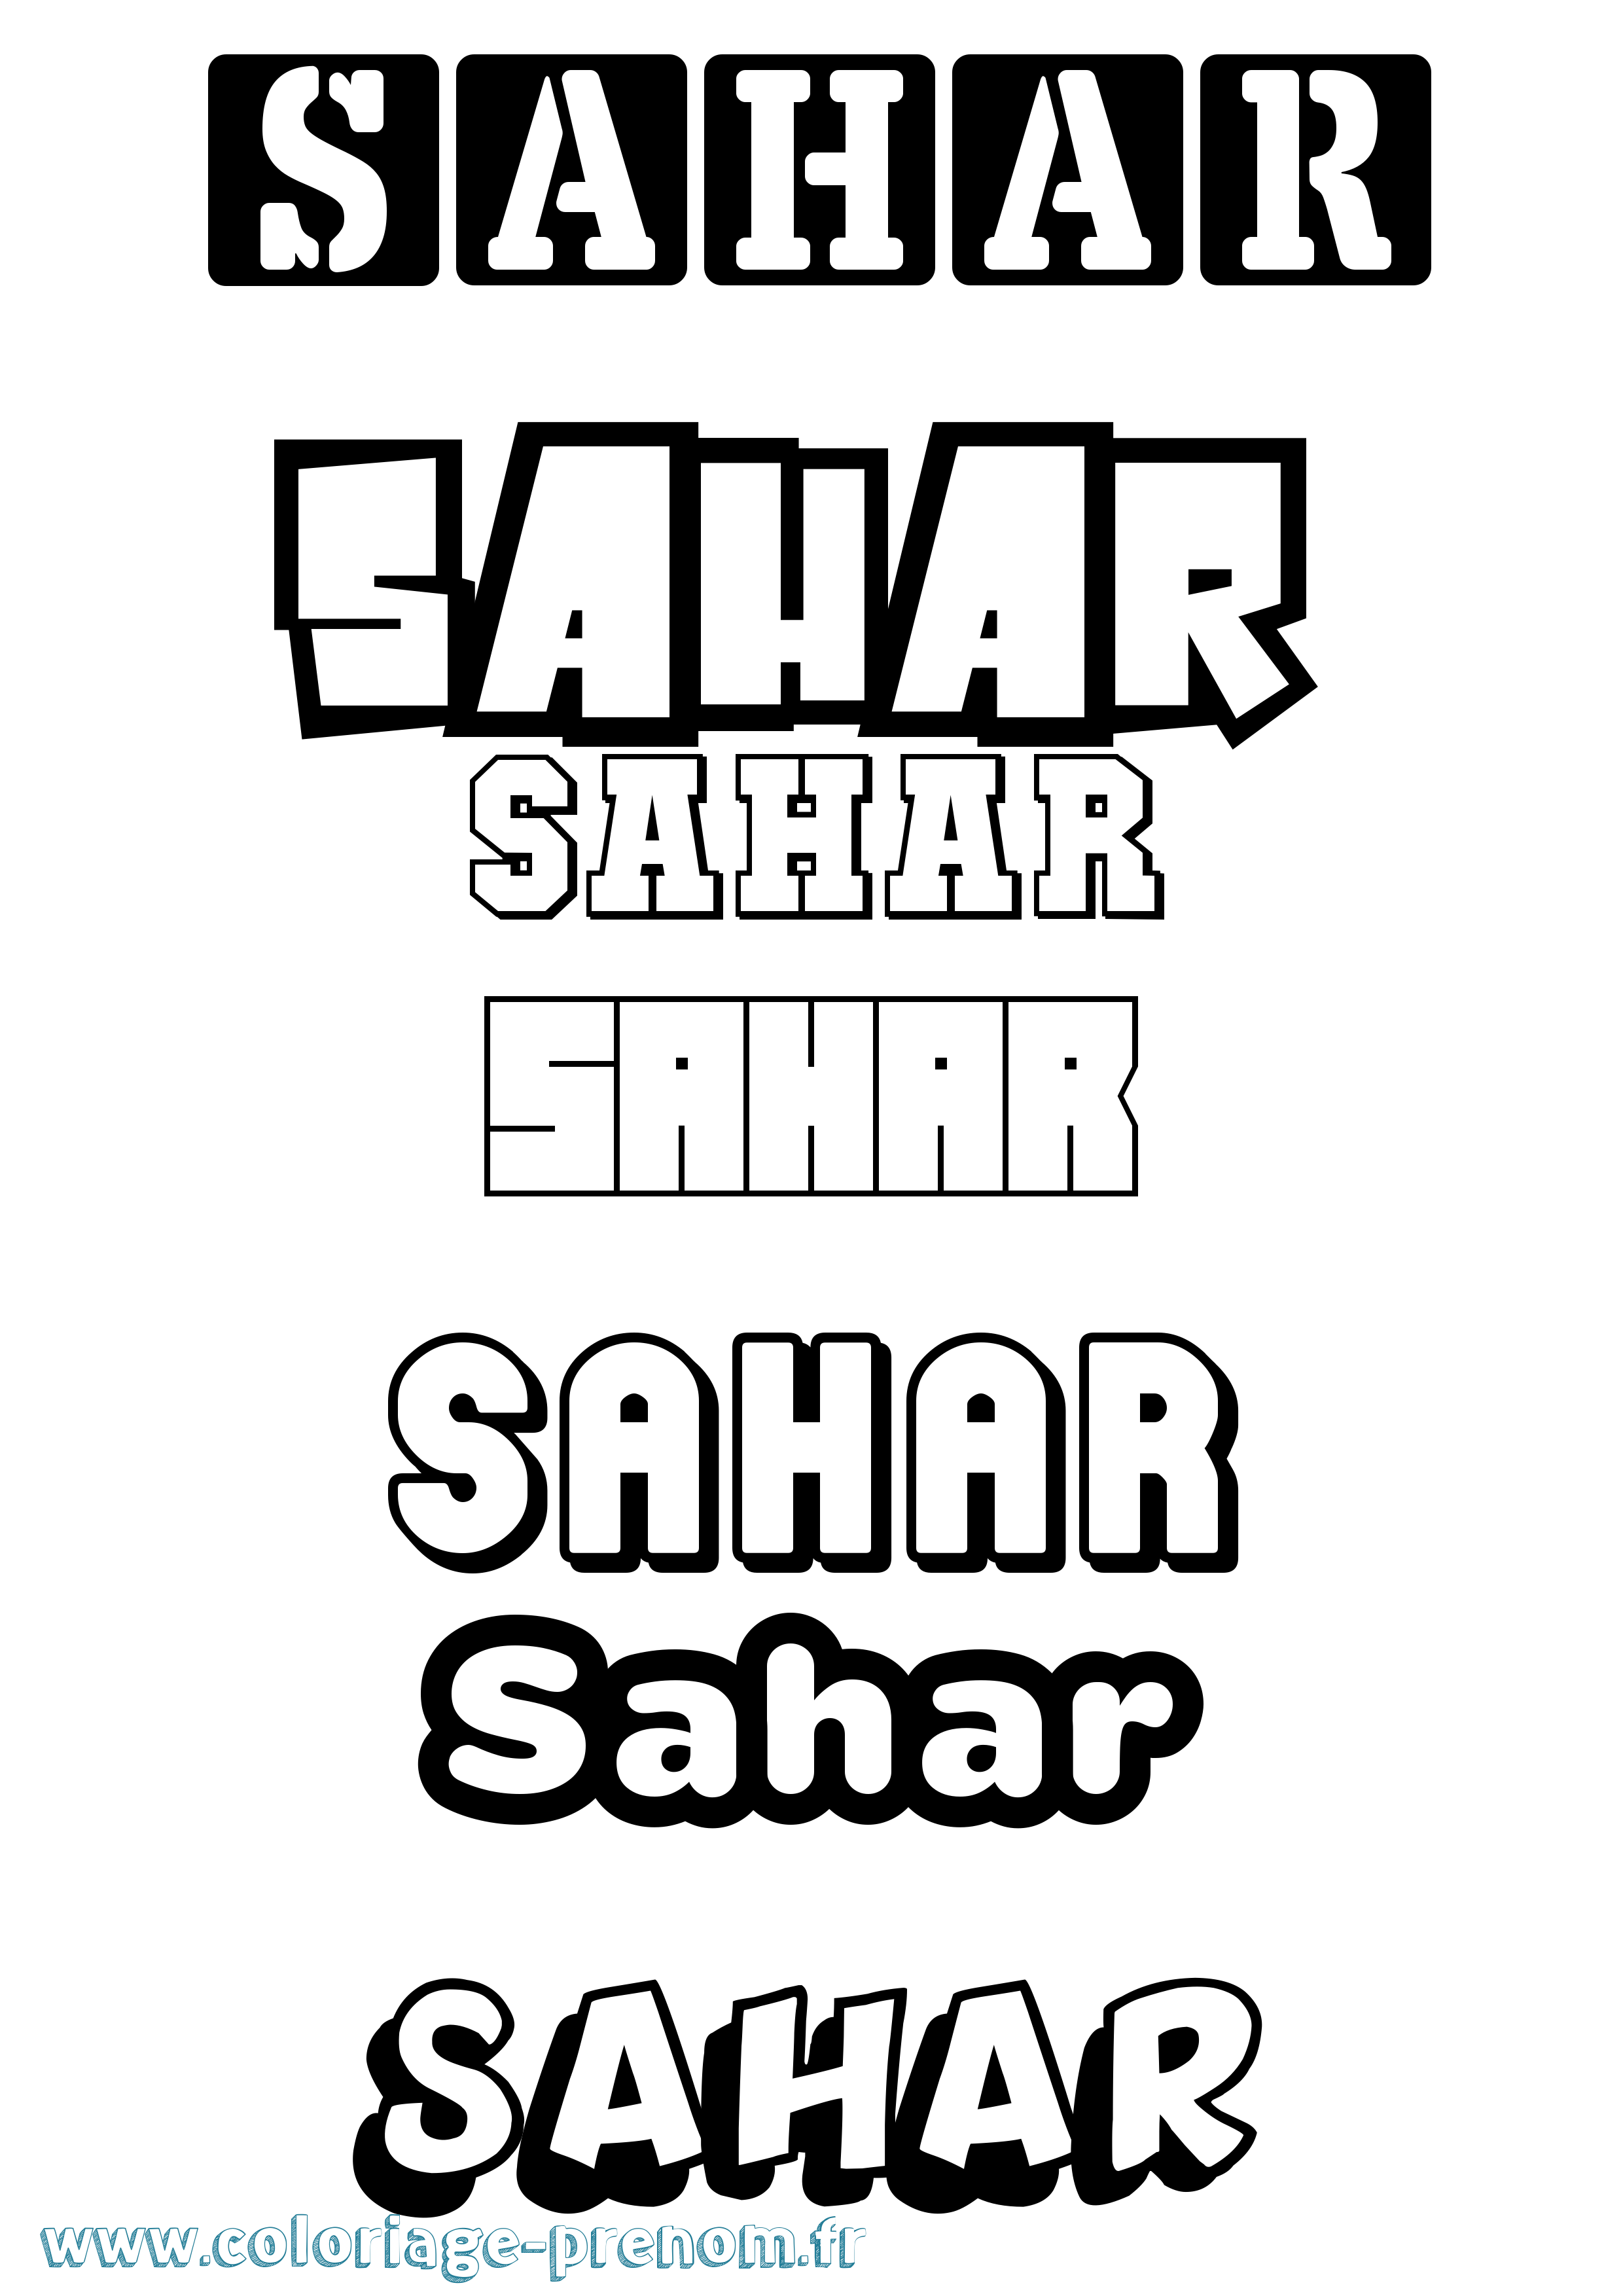 Coloriage prénom Sahar Simple